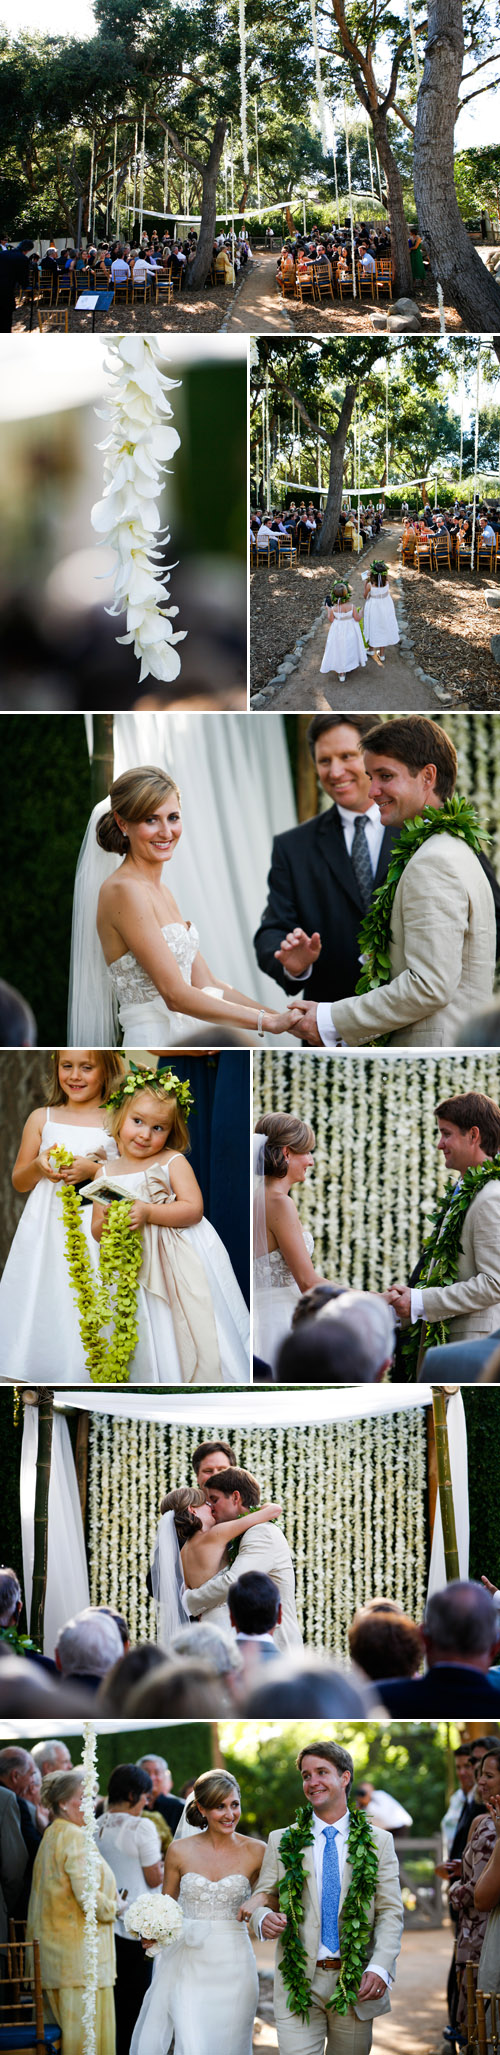 Santa Barbara, California real wedding coordinated by La Fete Weddings and photographed by Barnaby Draper Studios